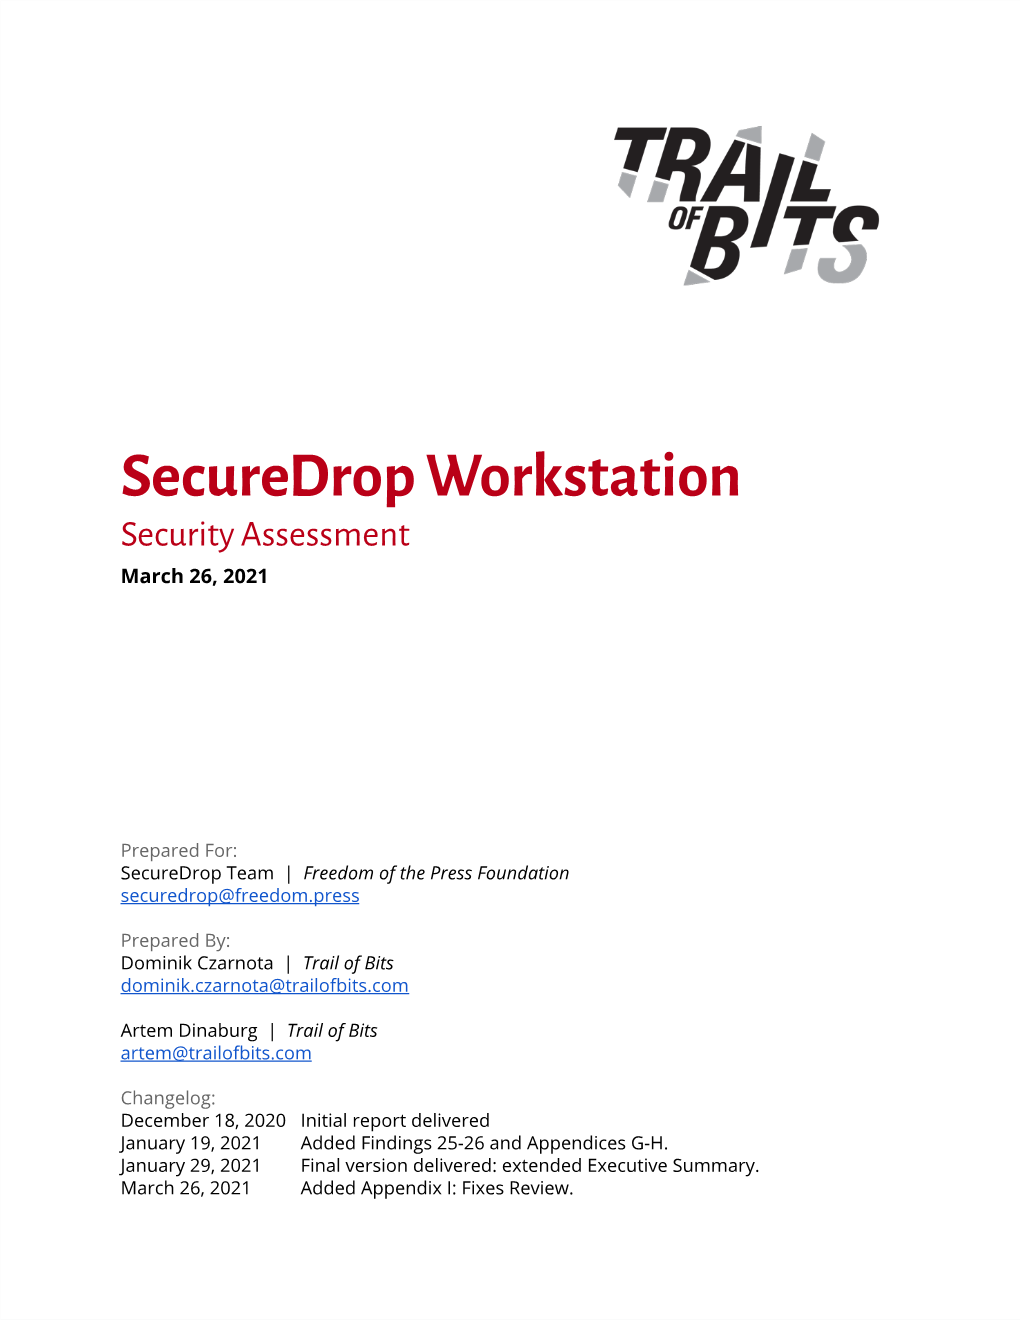 Securedrop Workstation Security Assessment March 26, 2021